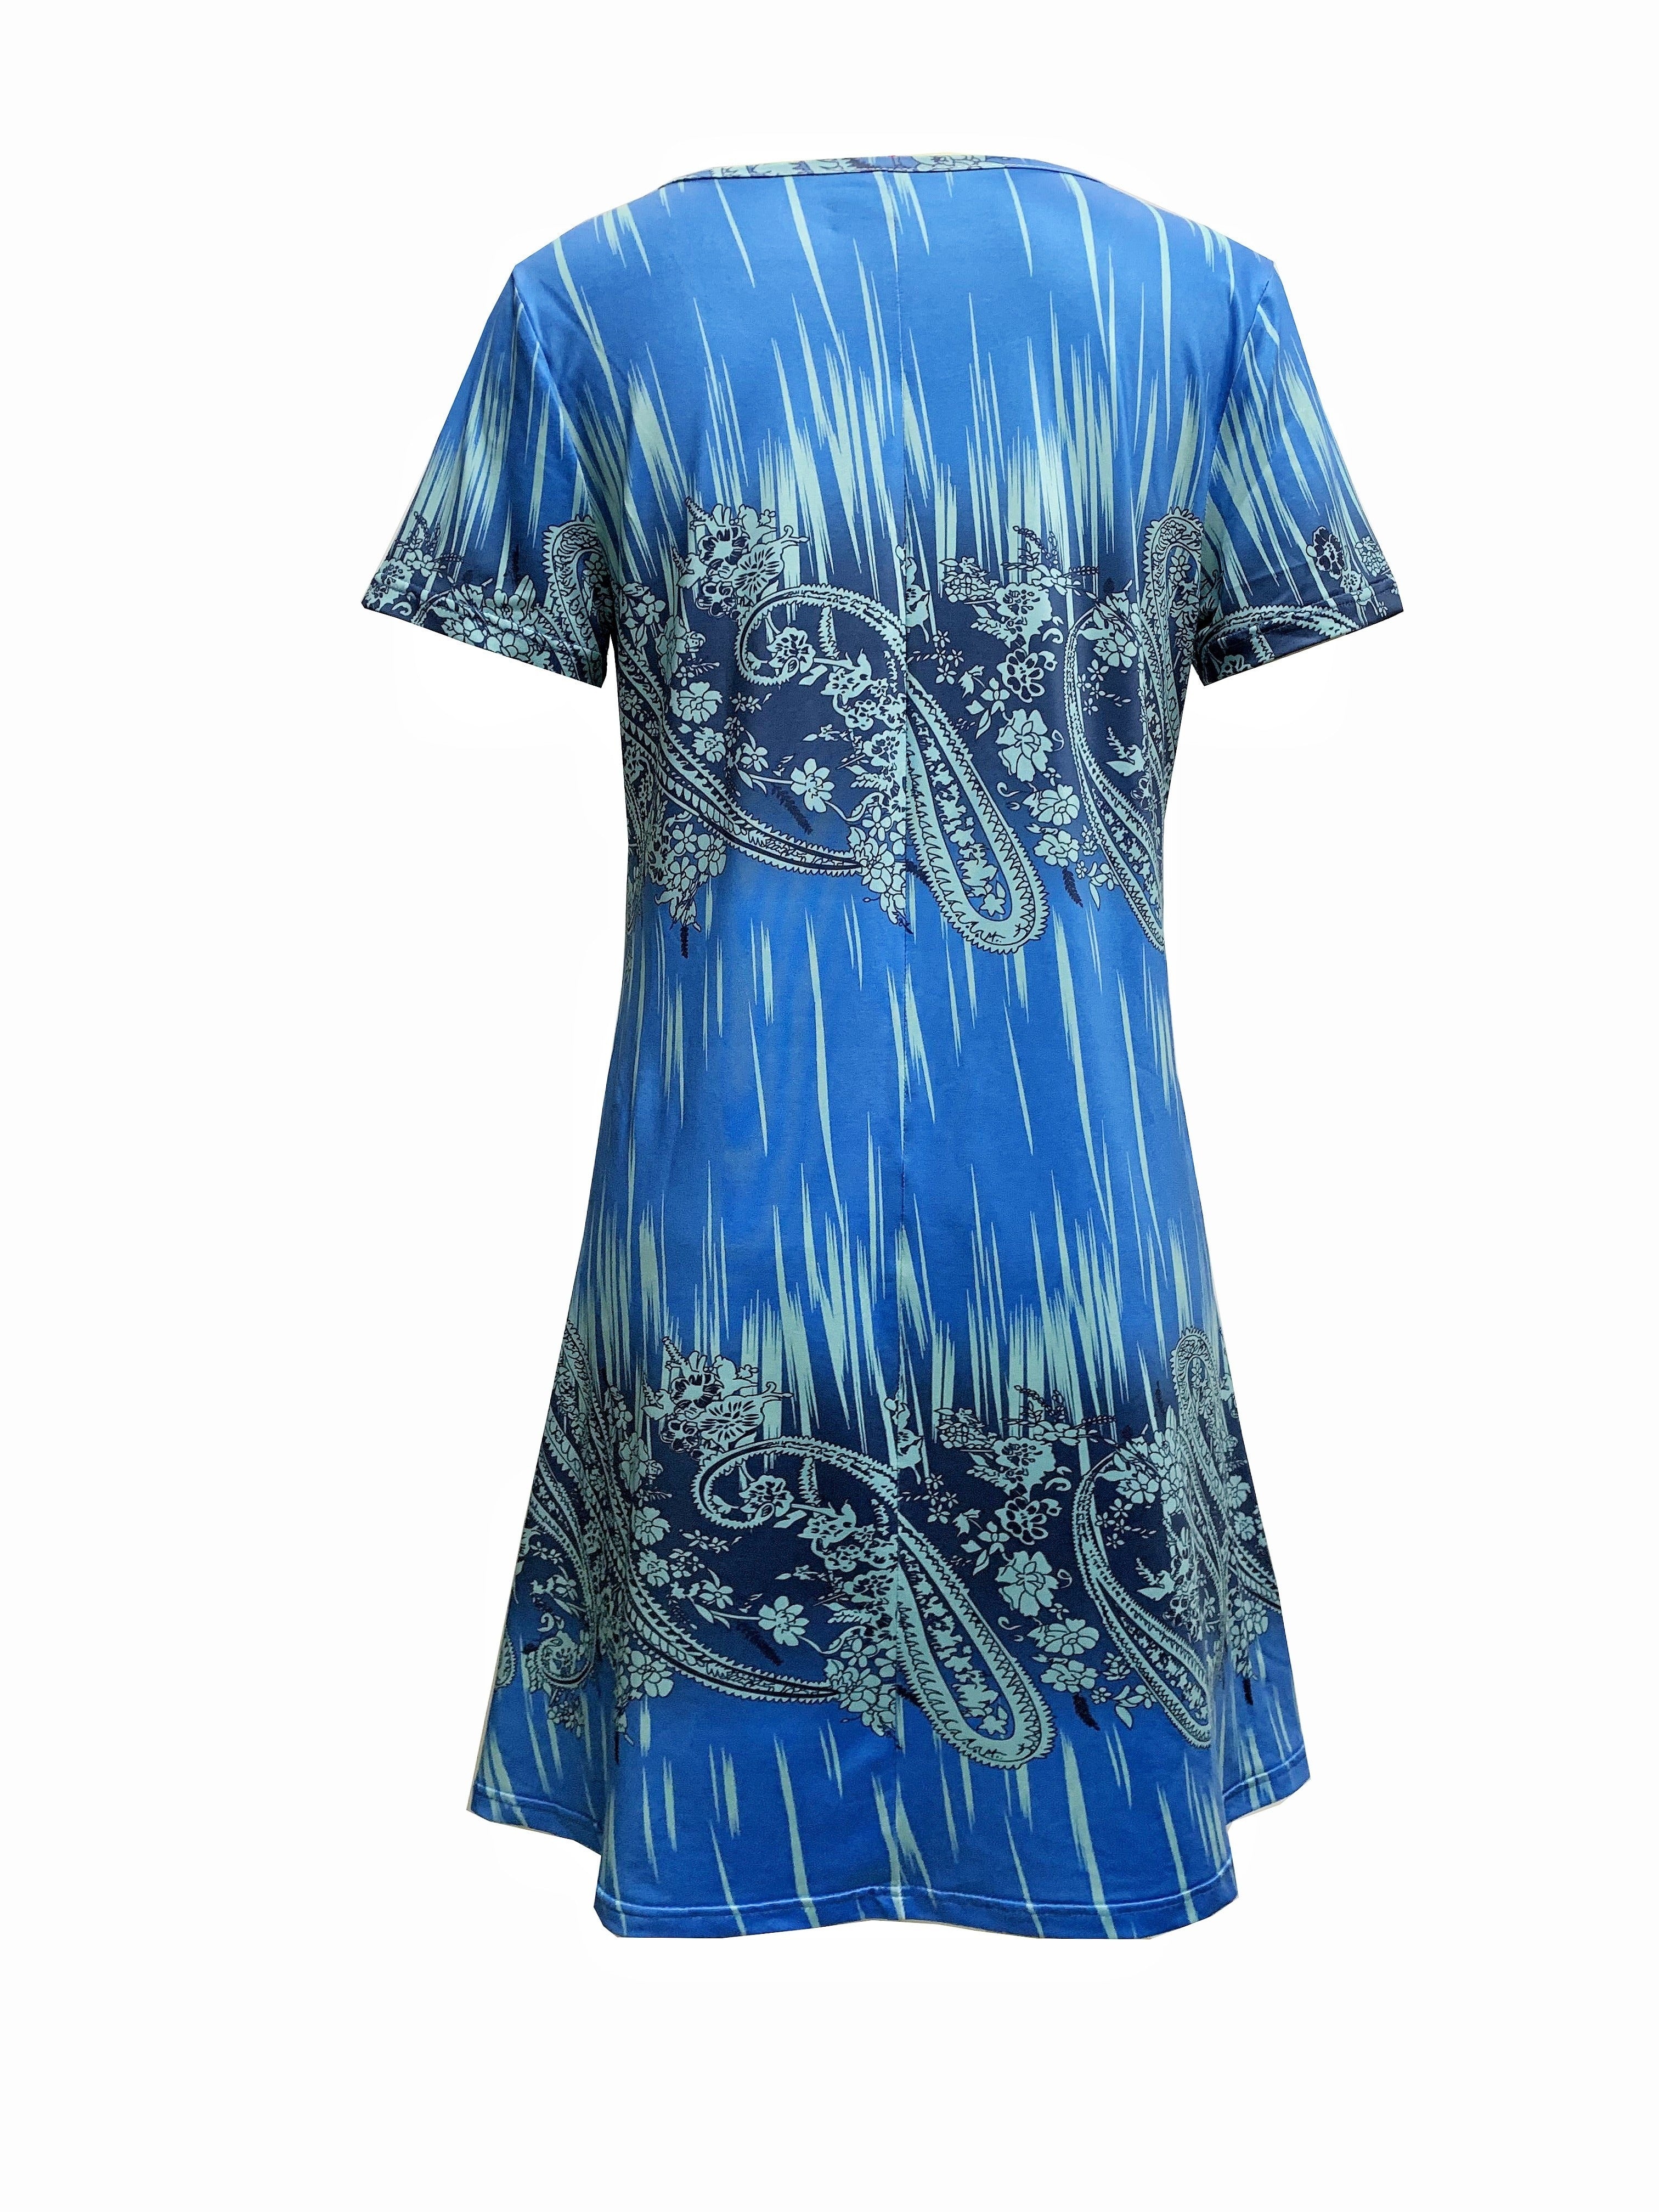 「binfenxie」Paisley Print Dress, Casual Crew Neck Short Sleeve Dress, Women's Clothing